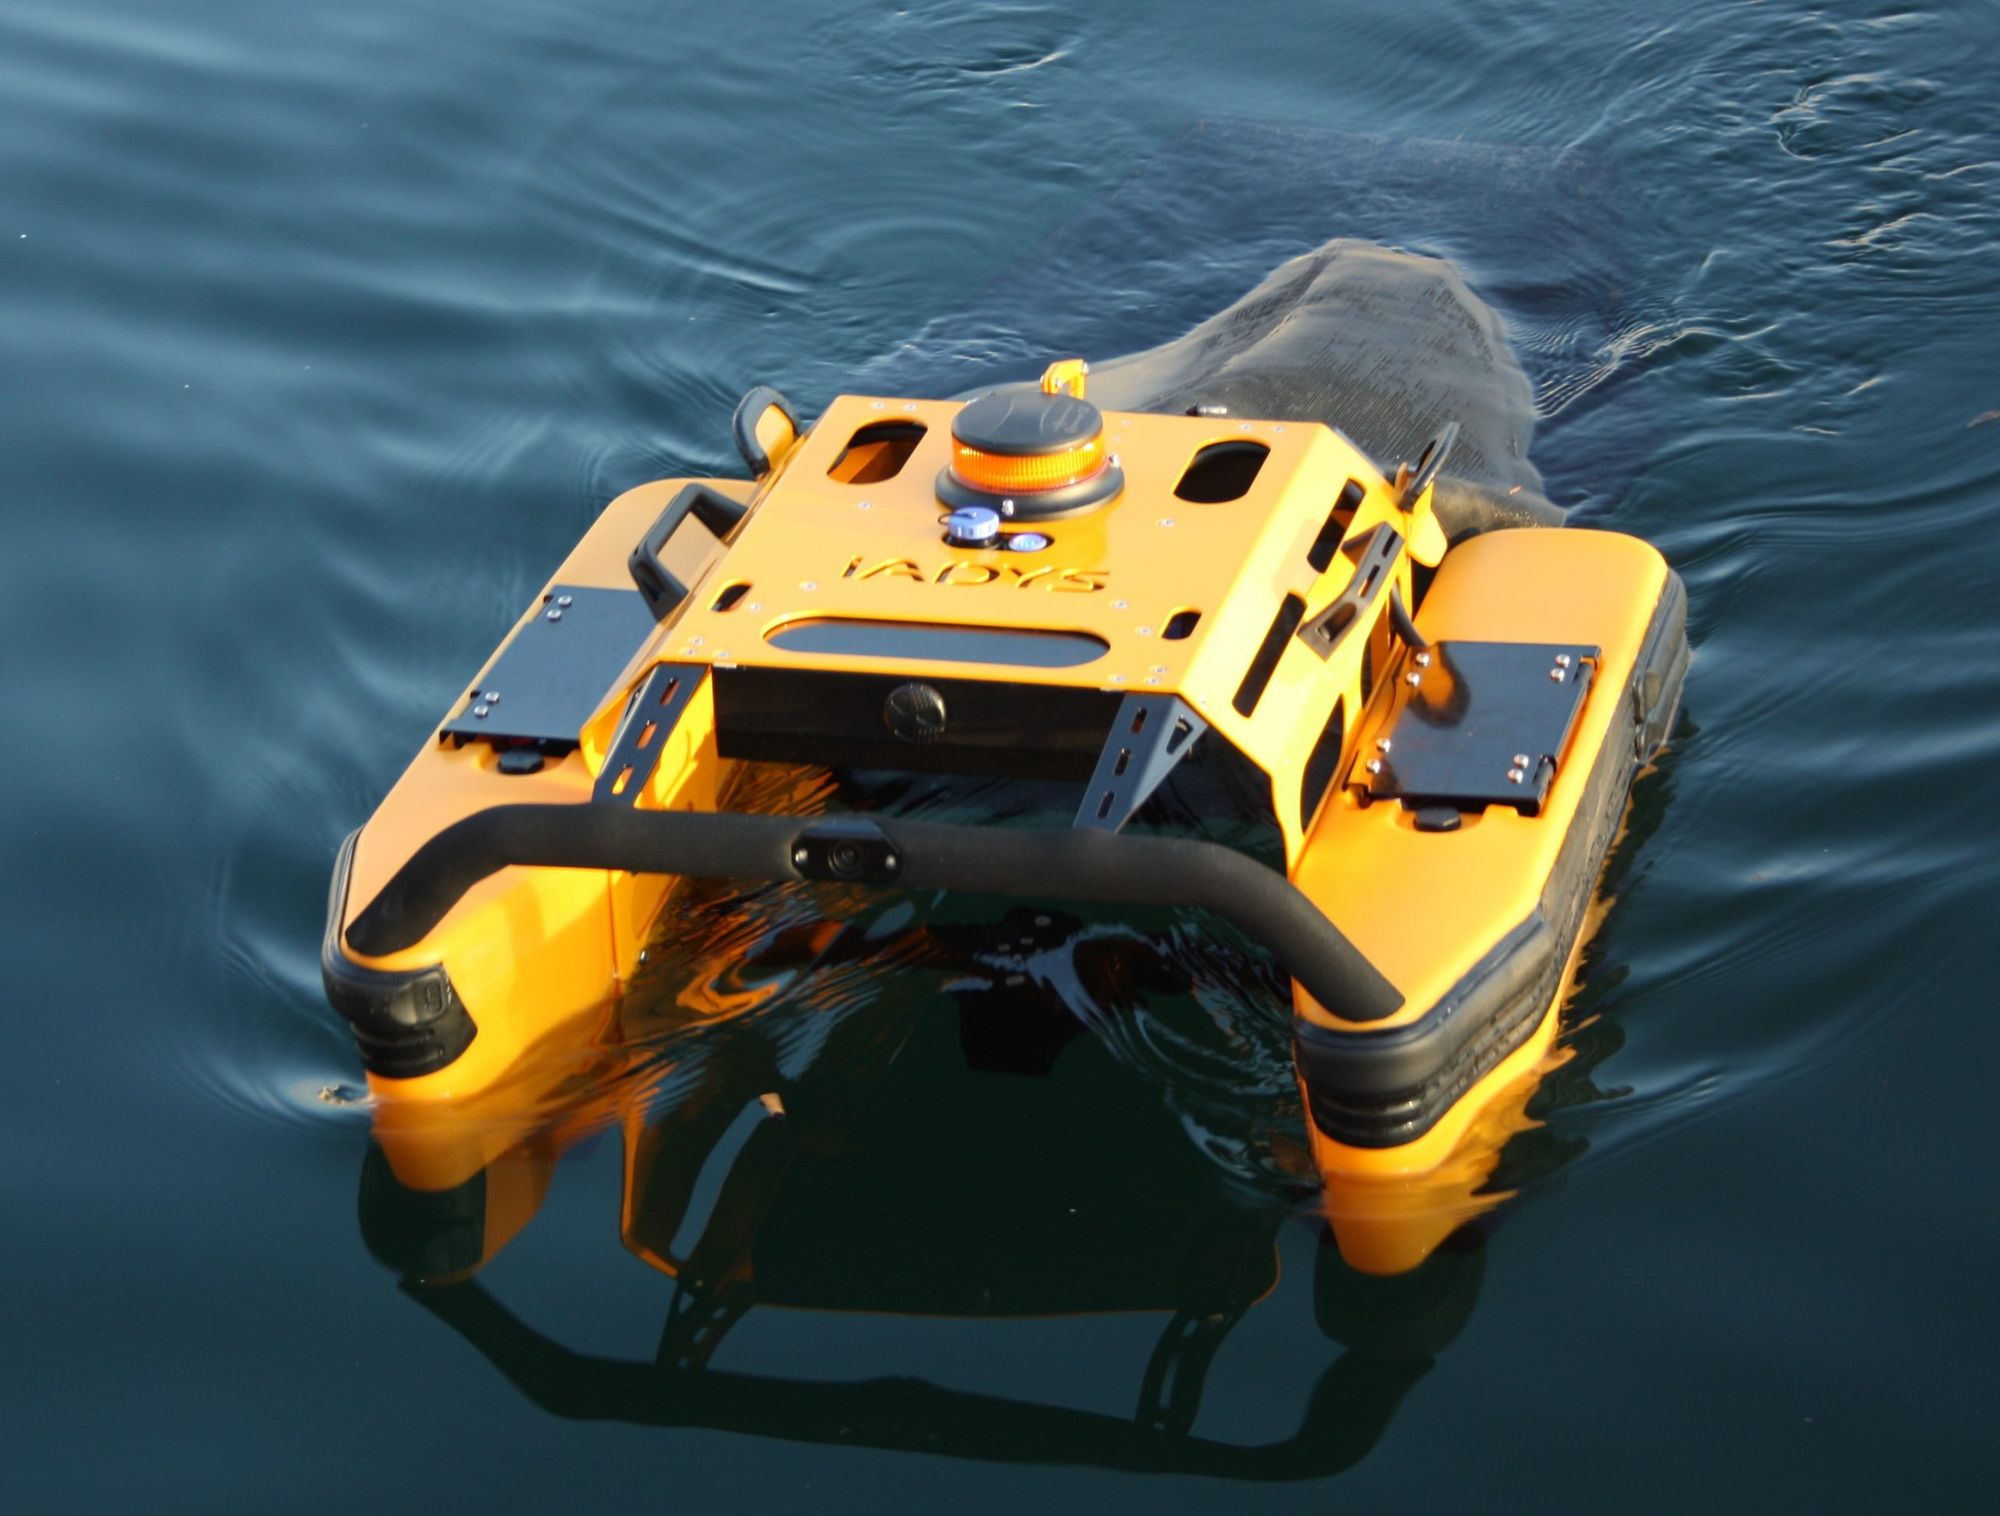 Aquatic robot promoting sustainability